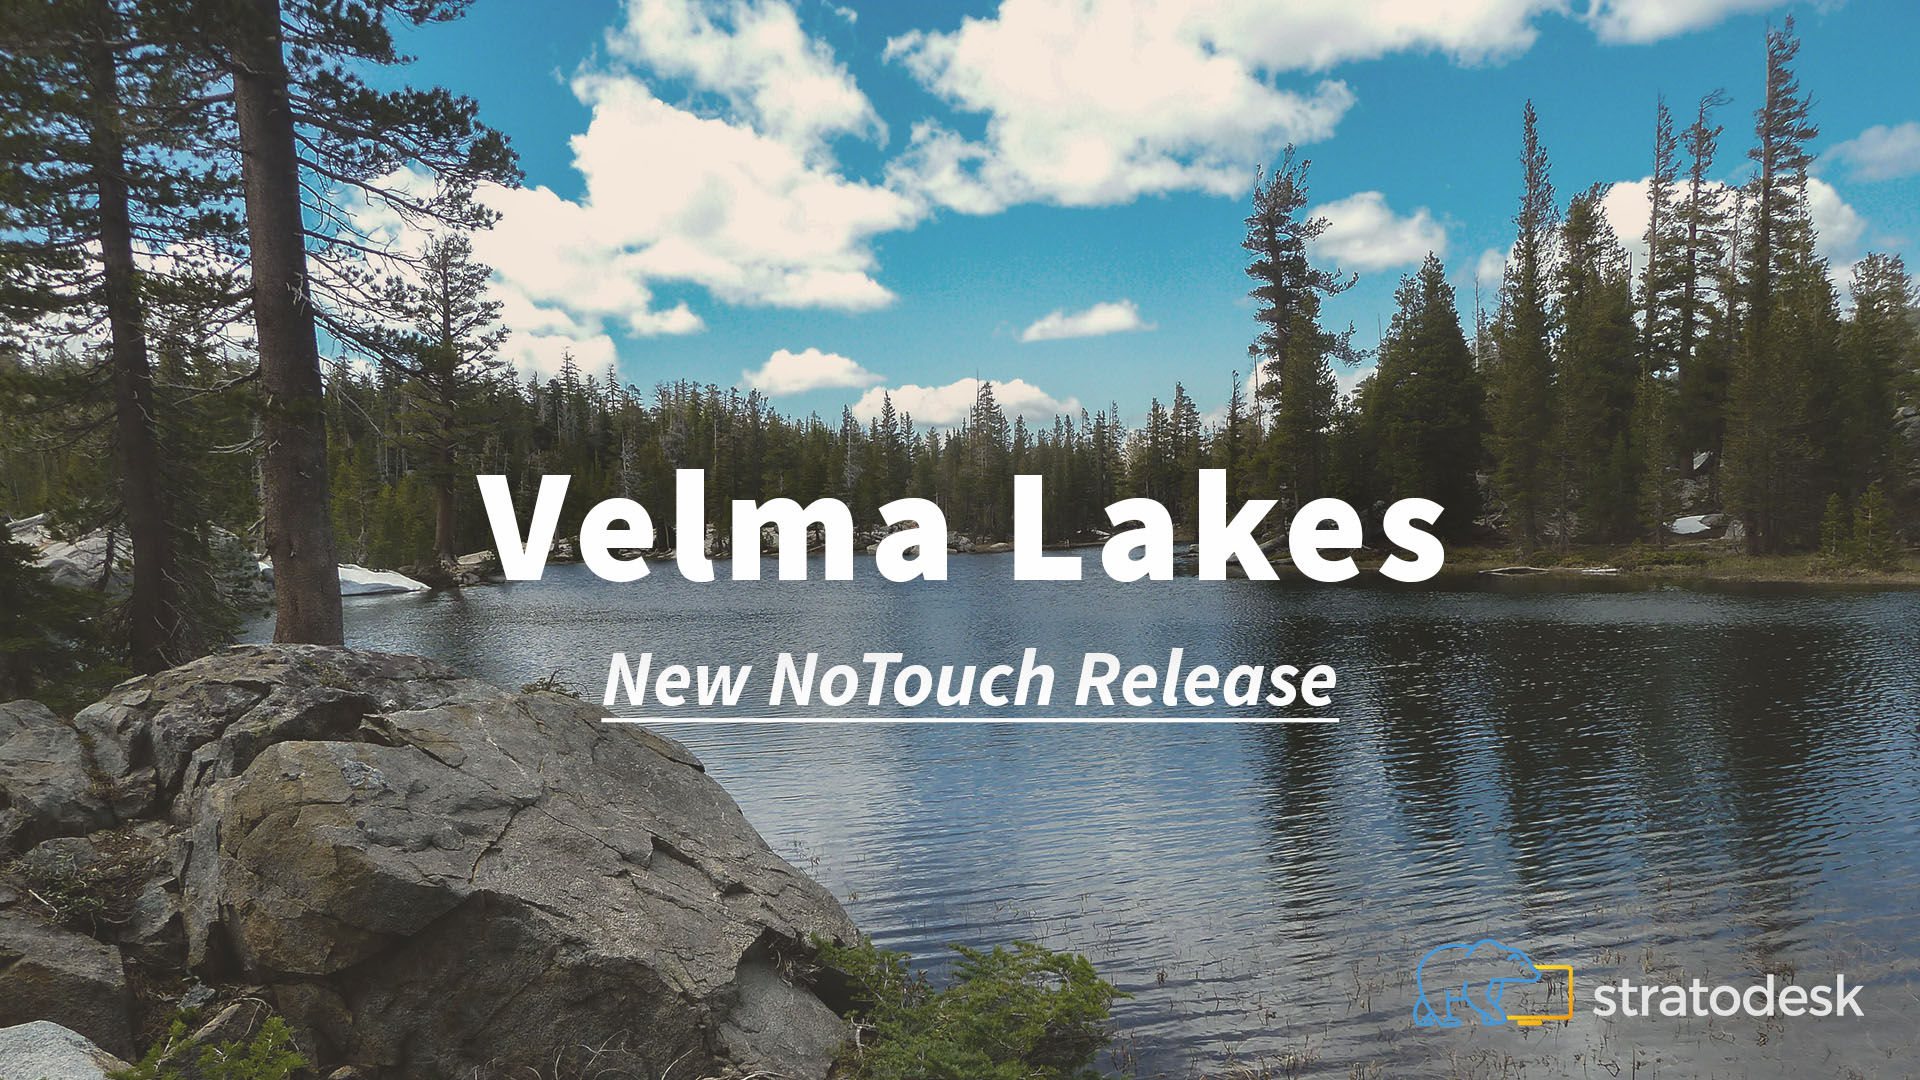 Velma Lakes